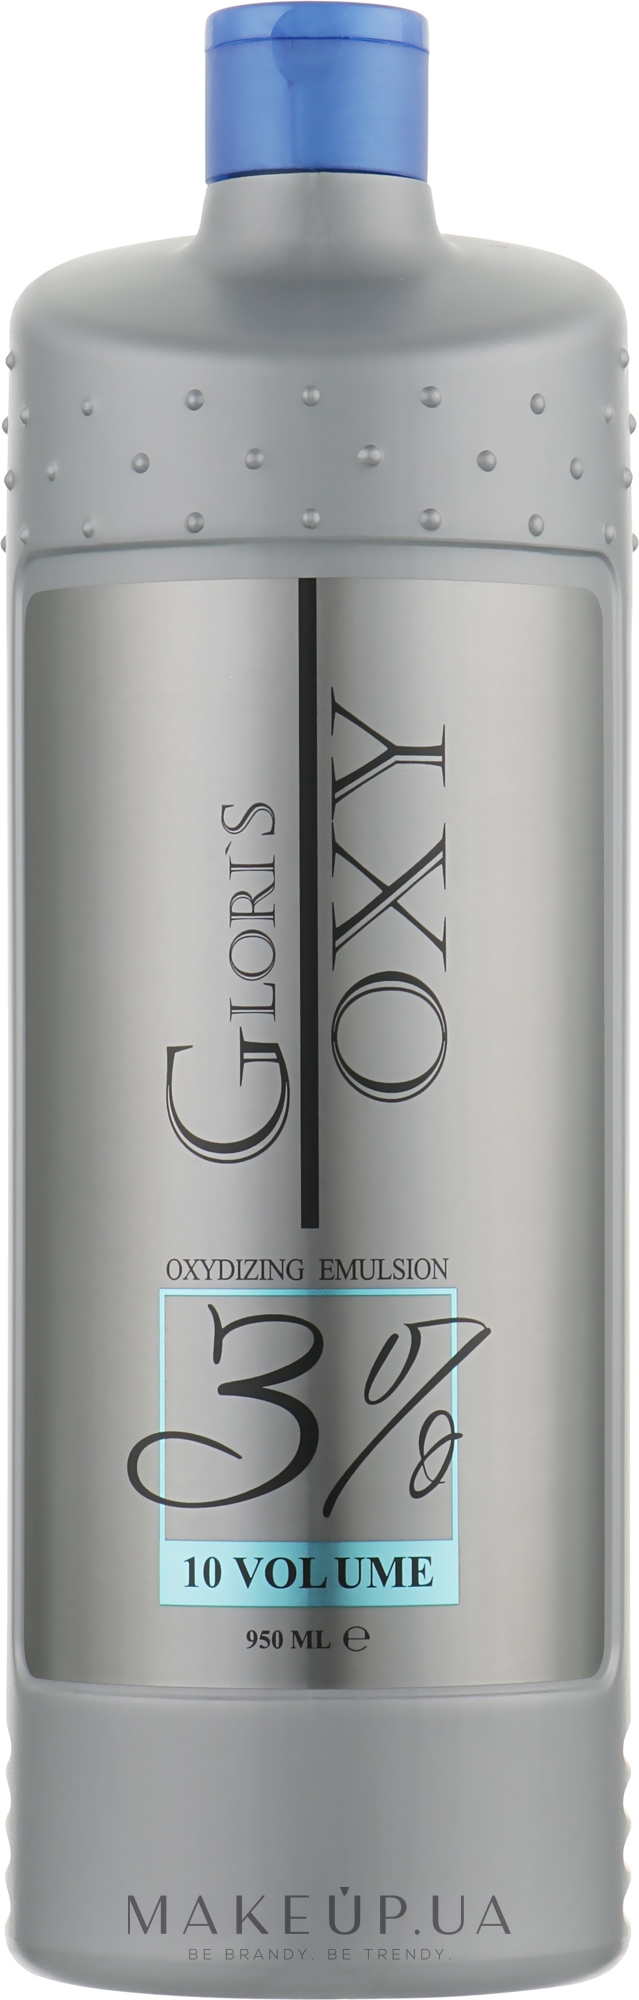 Окислительная эмульсия 3 % - Glori's Oxy Oxidizing Emulsion 10 Volume 3 % — фото 950ml